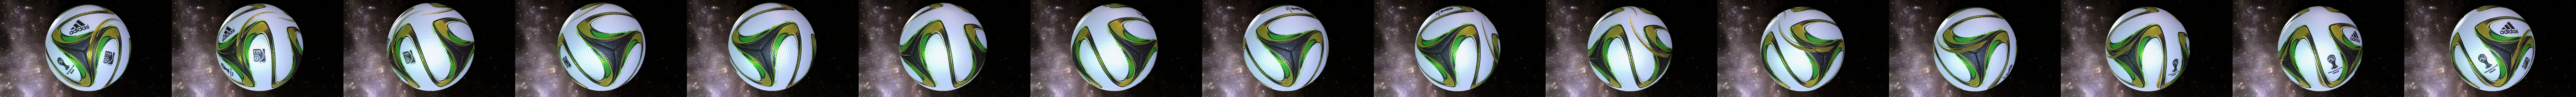 Brazuca Final Soccer Ball - 3D model by Yimit (@yimit) [9d54b48]